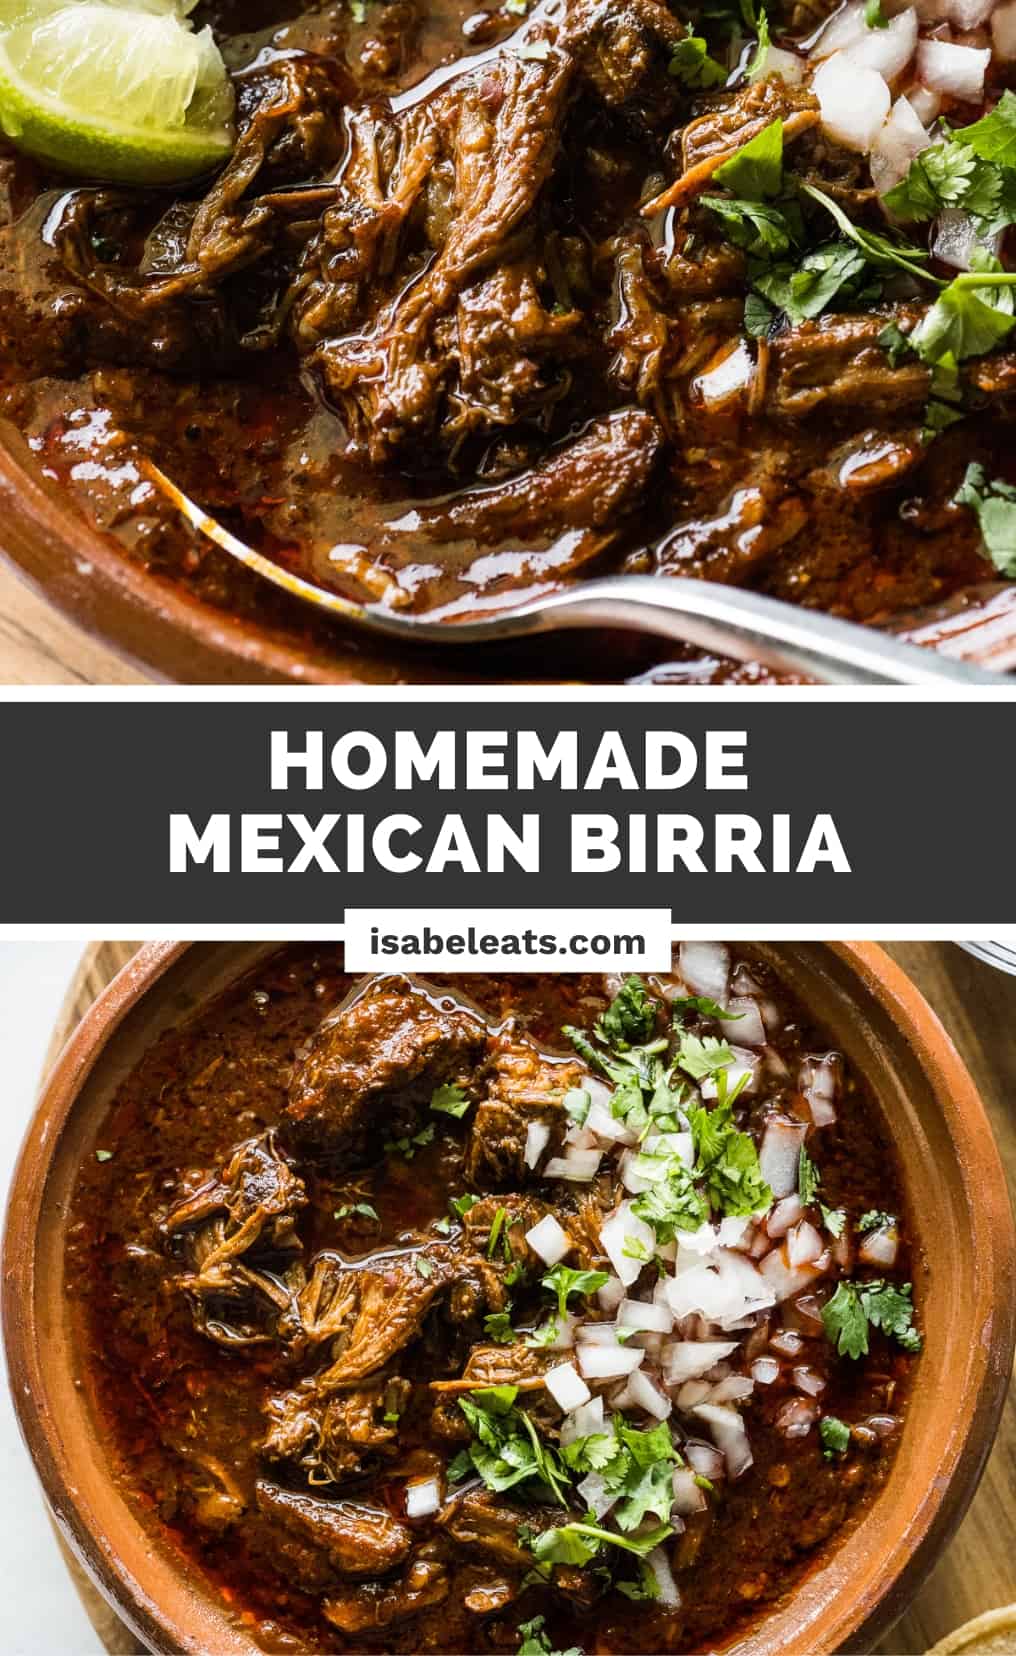 Authentic Mexican Birria